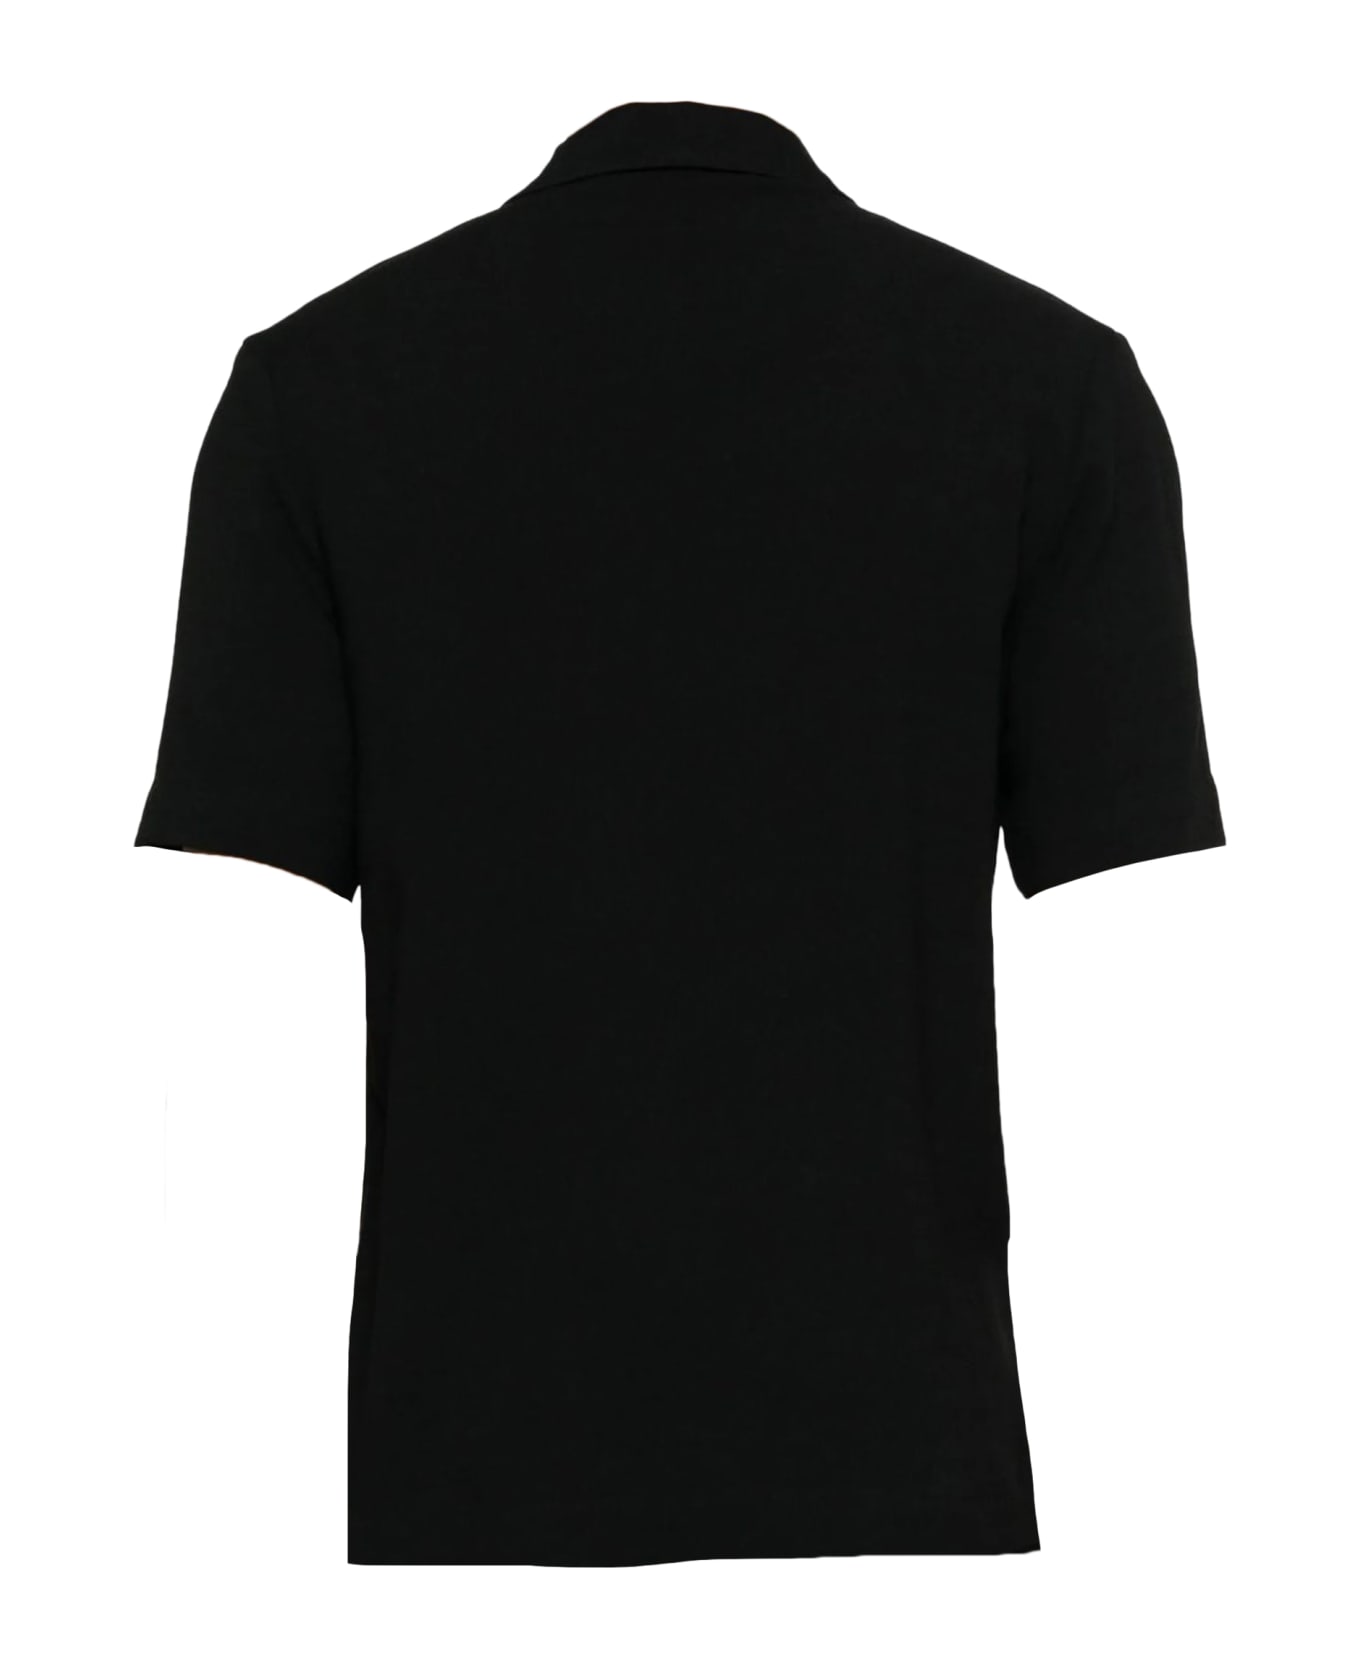 Séfr Sefr Shirts Black - Black